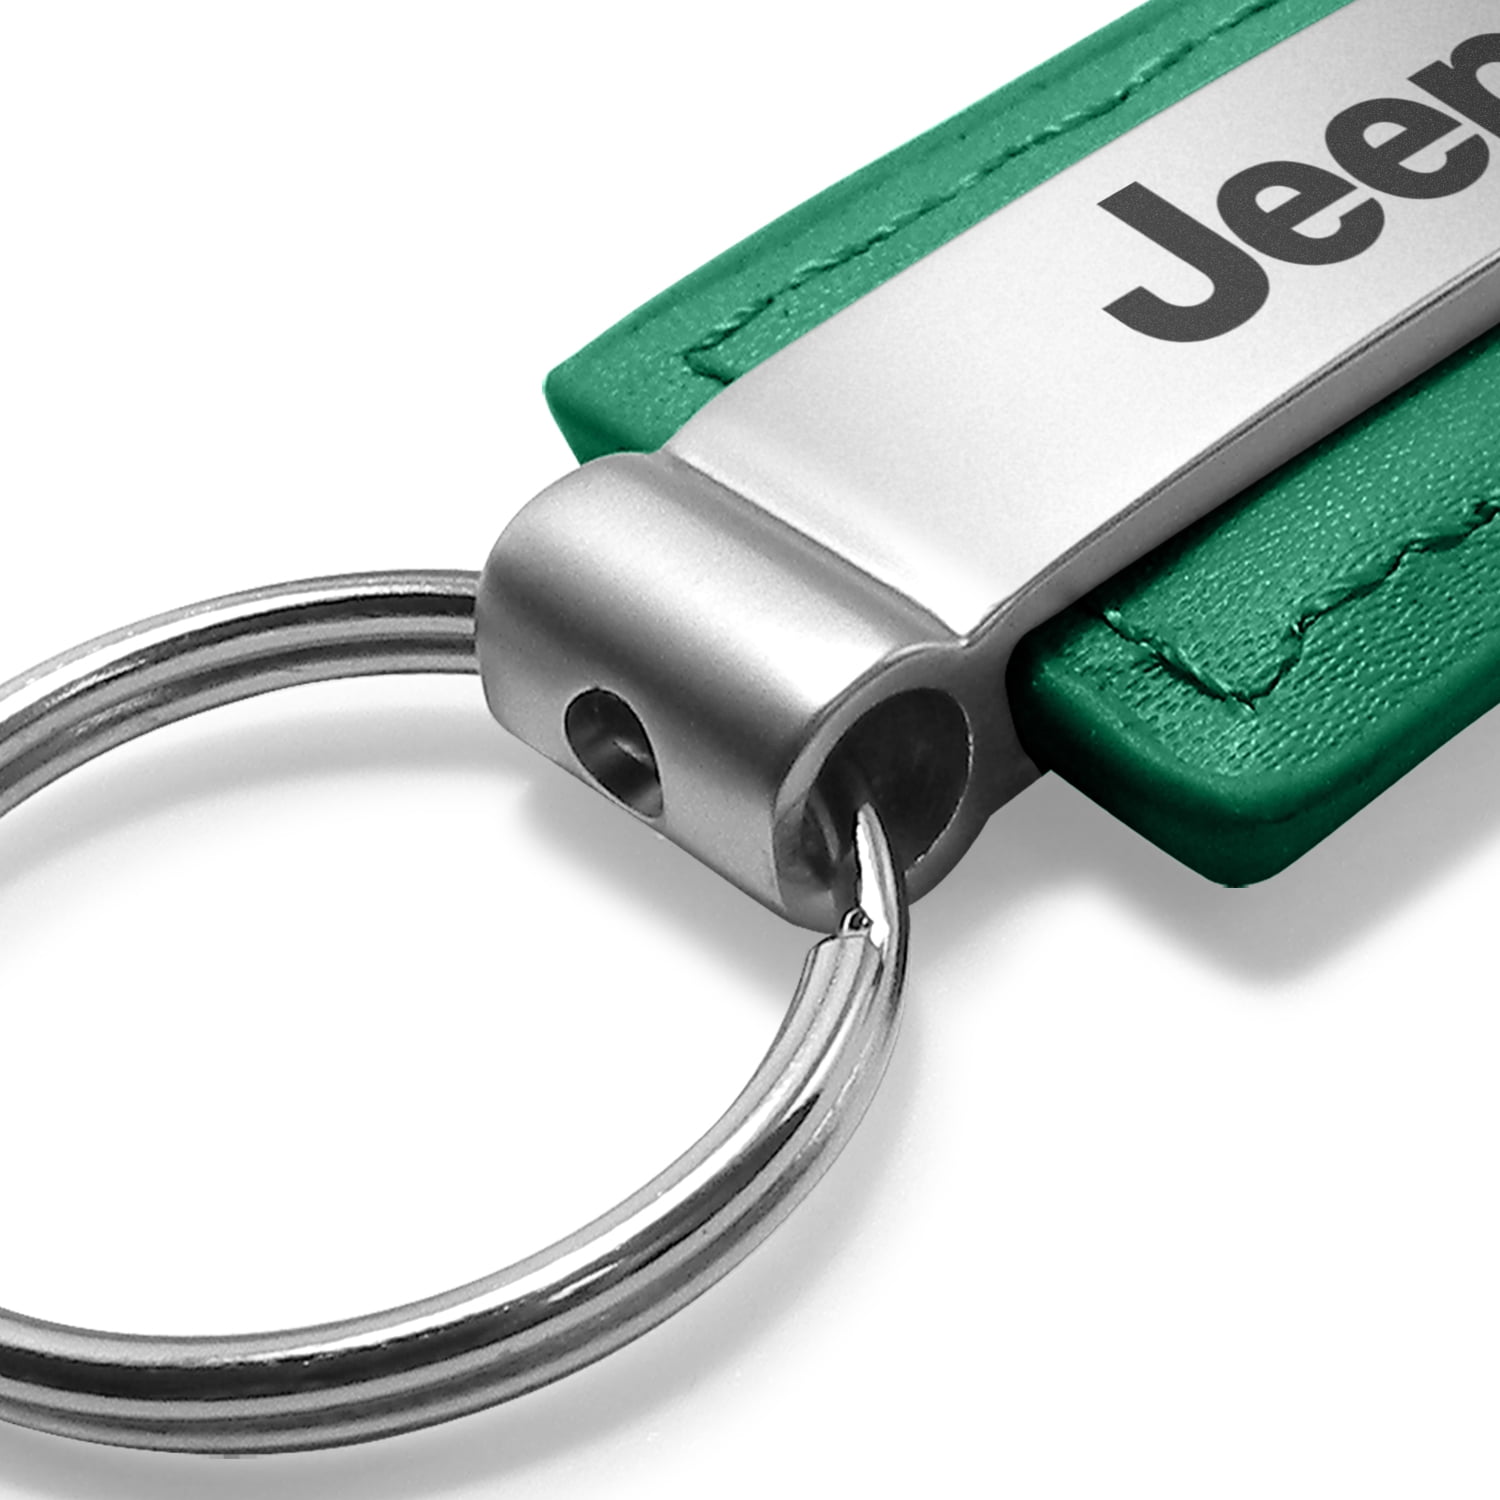 Jeep Keychain & Keyring - Green Premium Leather - Walmart.com - Walmart.com